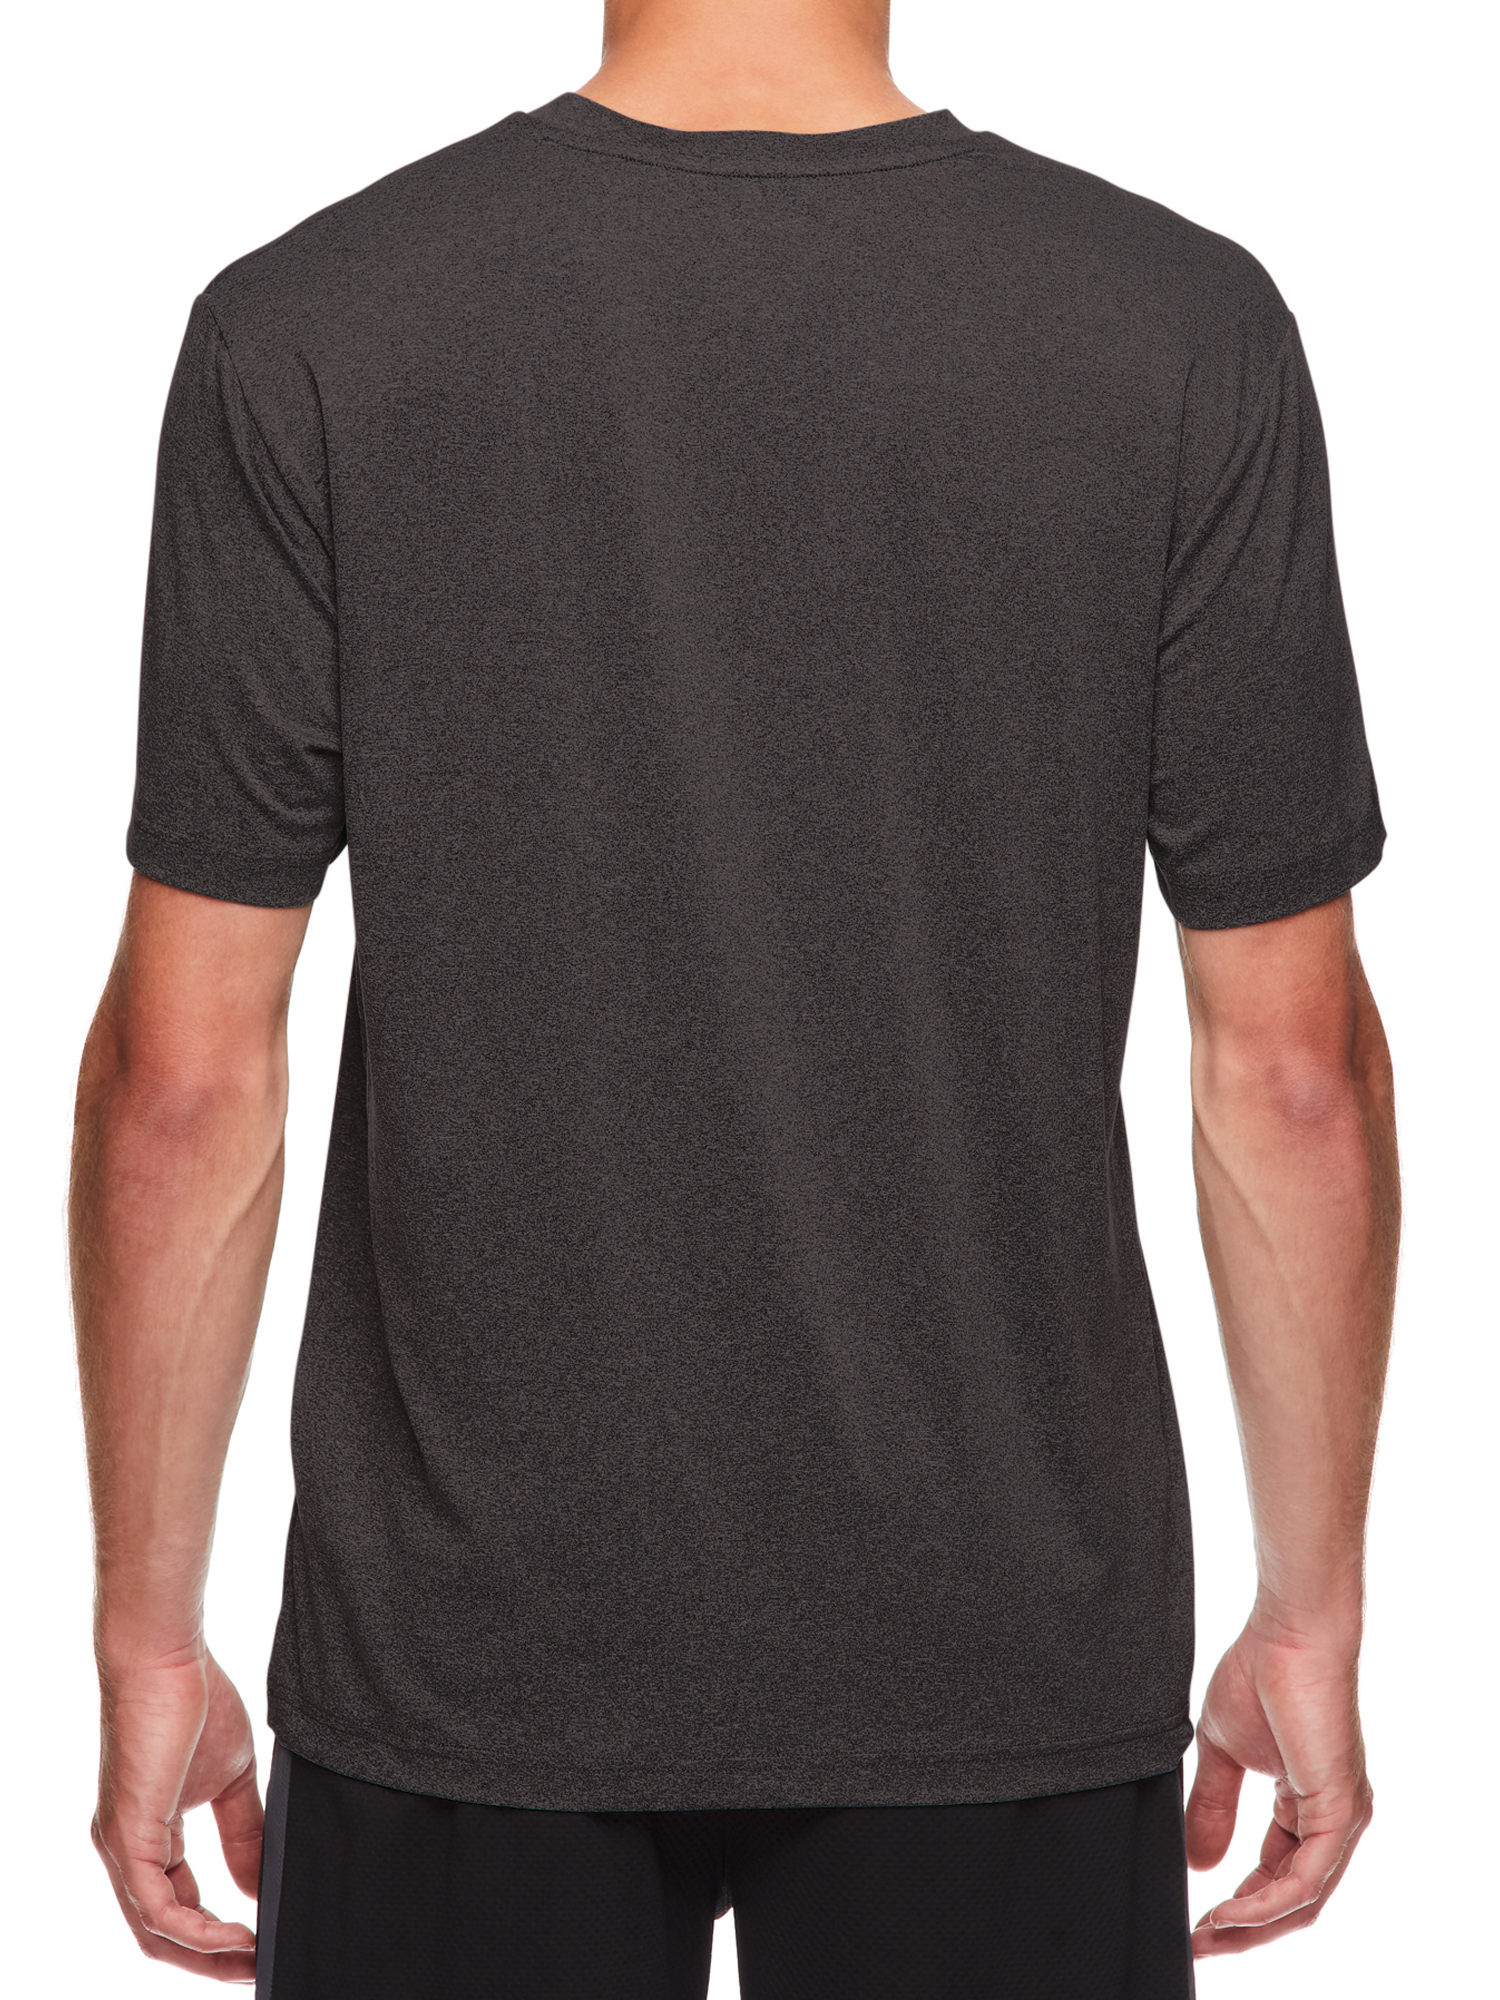 Reebok Men's Bolt Strike V-Neck Short Sleeve T-Shirt - image 2 of 4